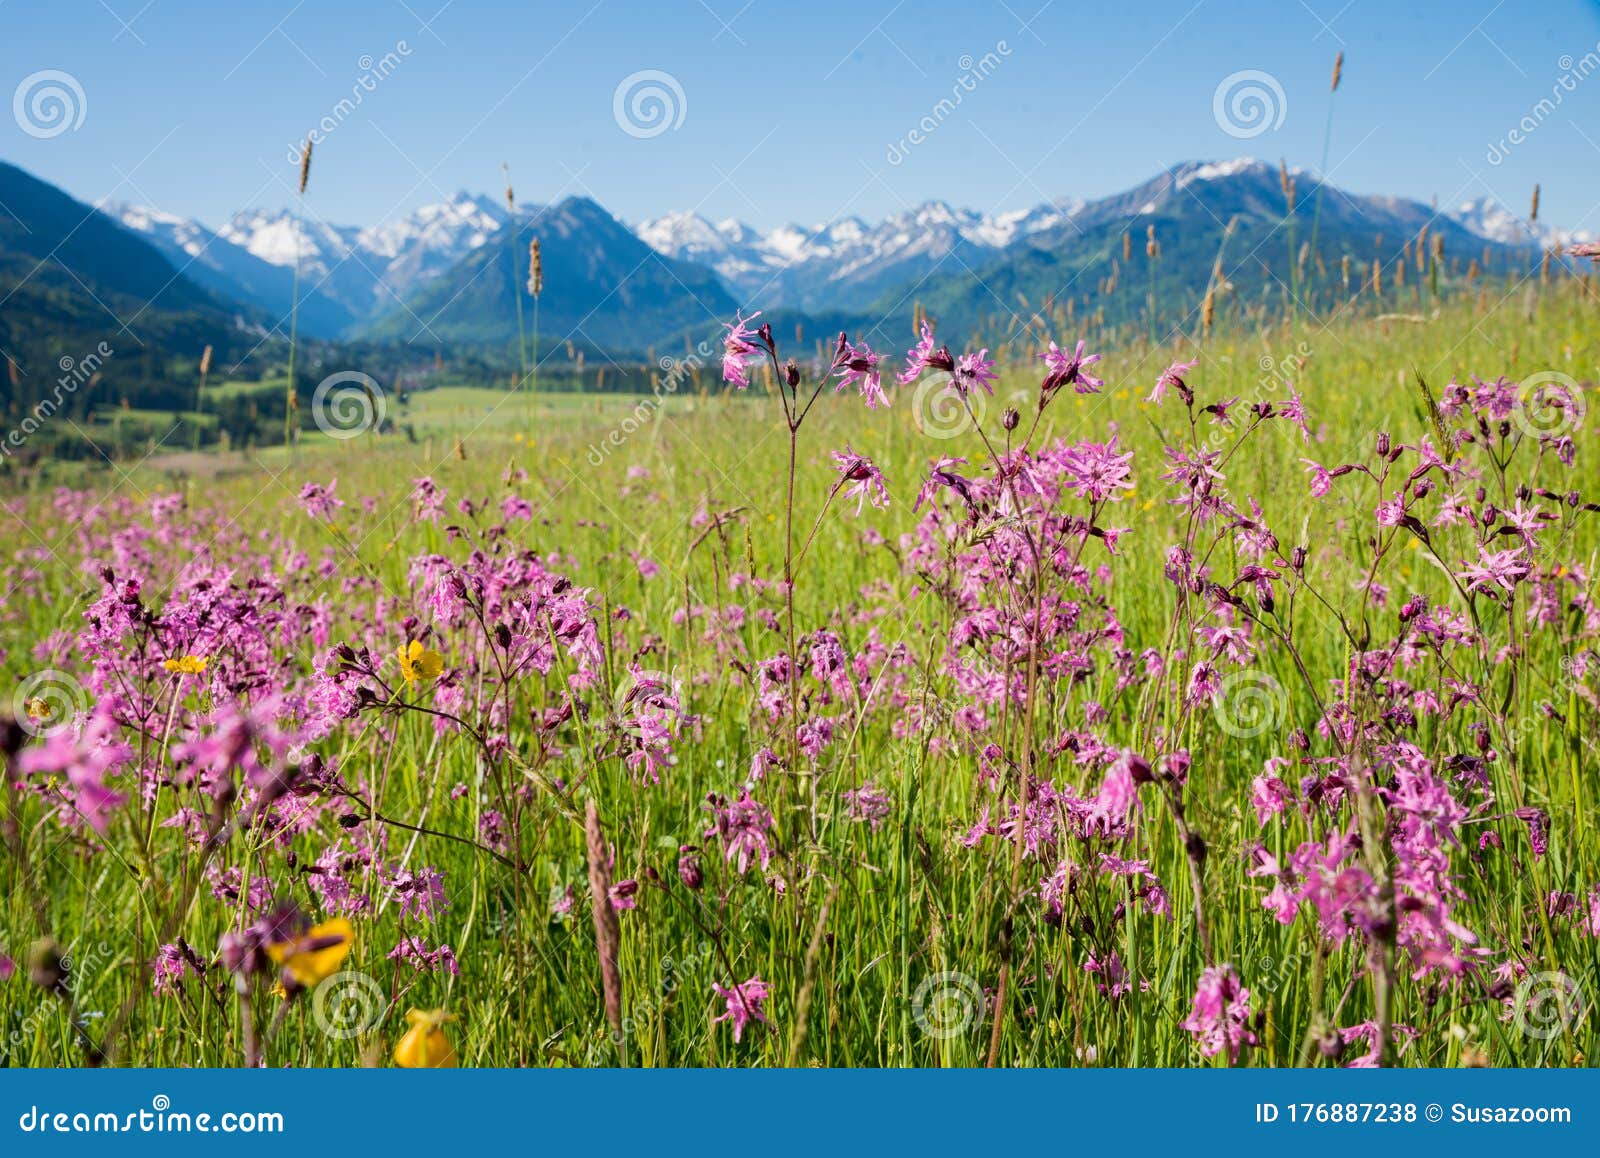 spring meadow with pink lychnis flowers, mountain landscape allgau near oberstdorf